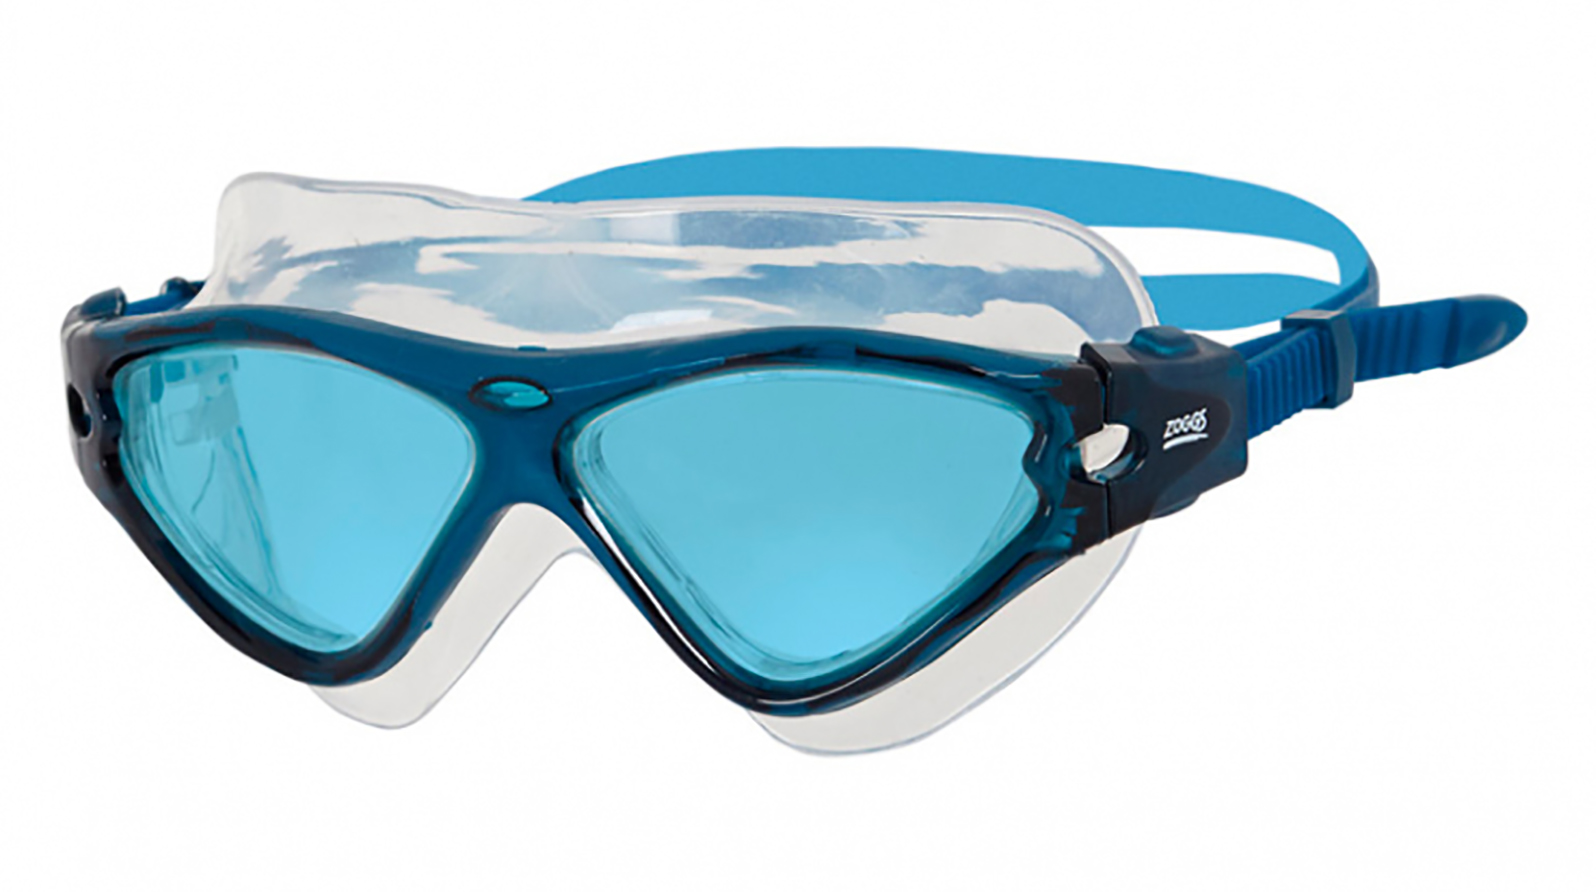 ZOGGS Очки для плавания Tri-vision Mask (синий/голубой) очки для плавания детские onlytop беруши розовый